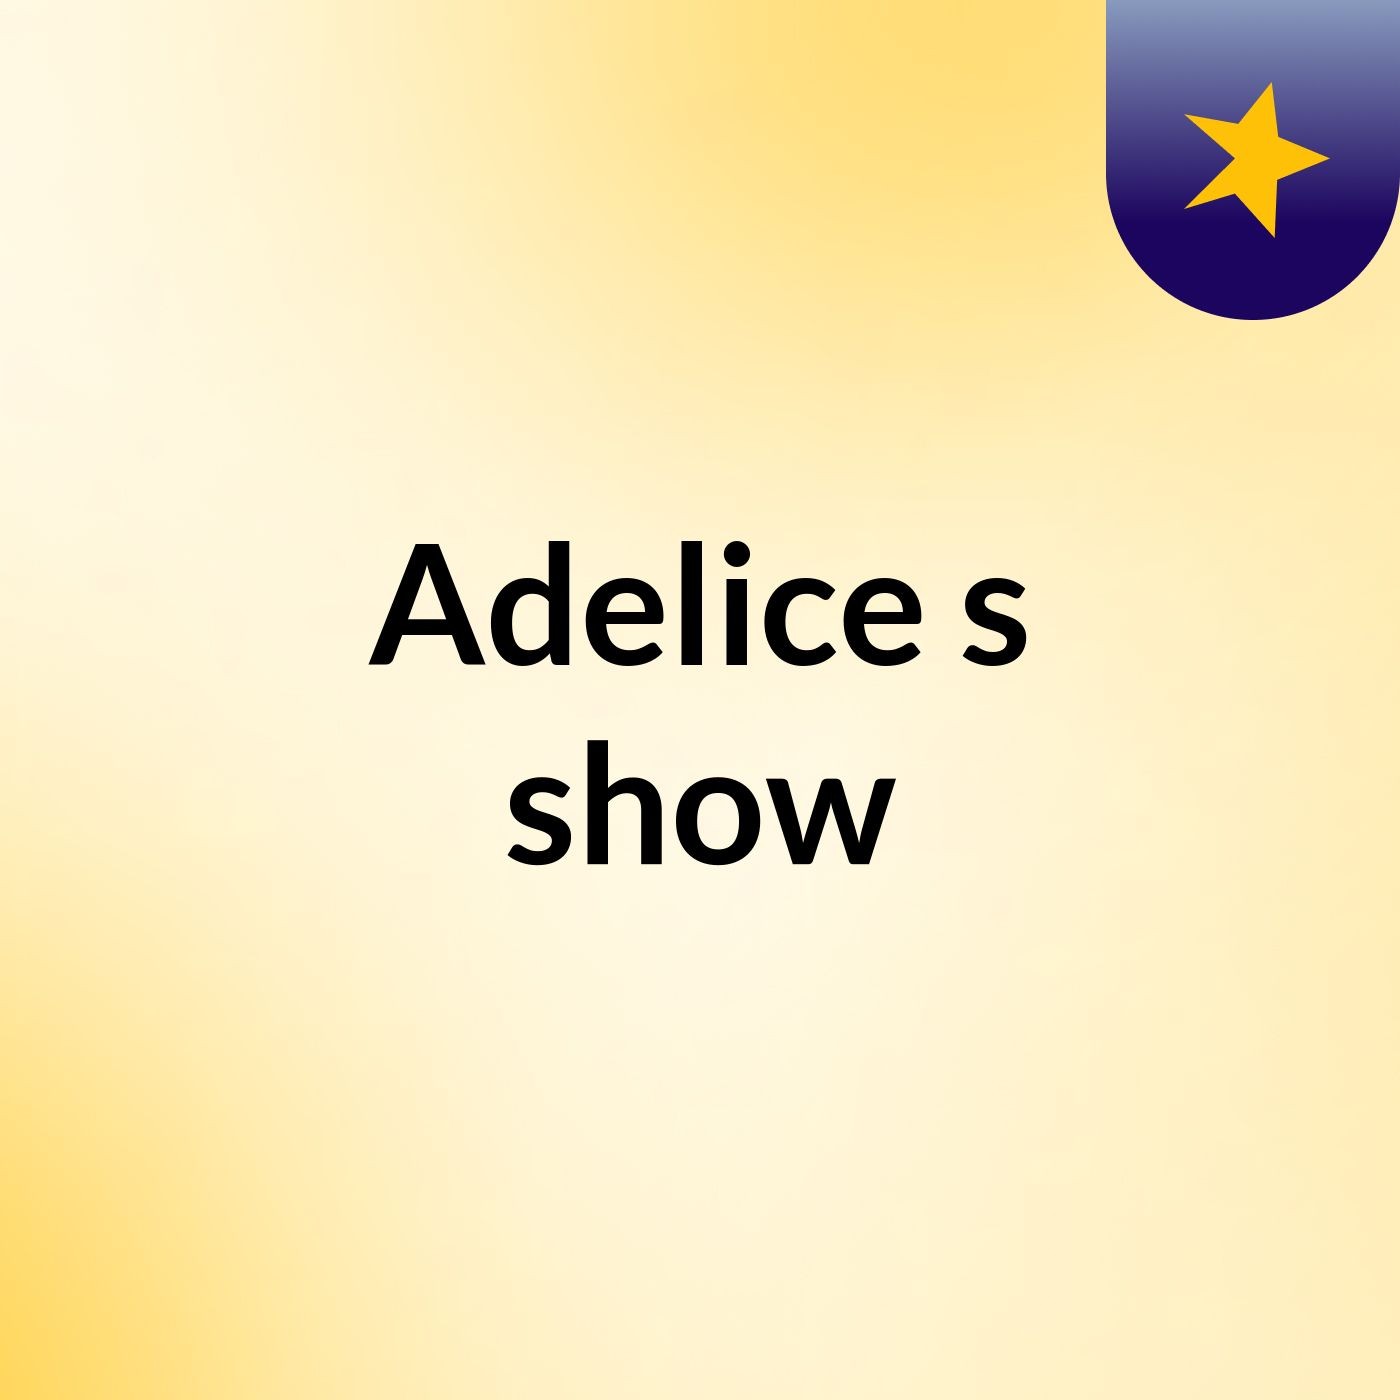 Adelice's show